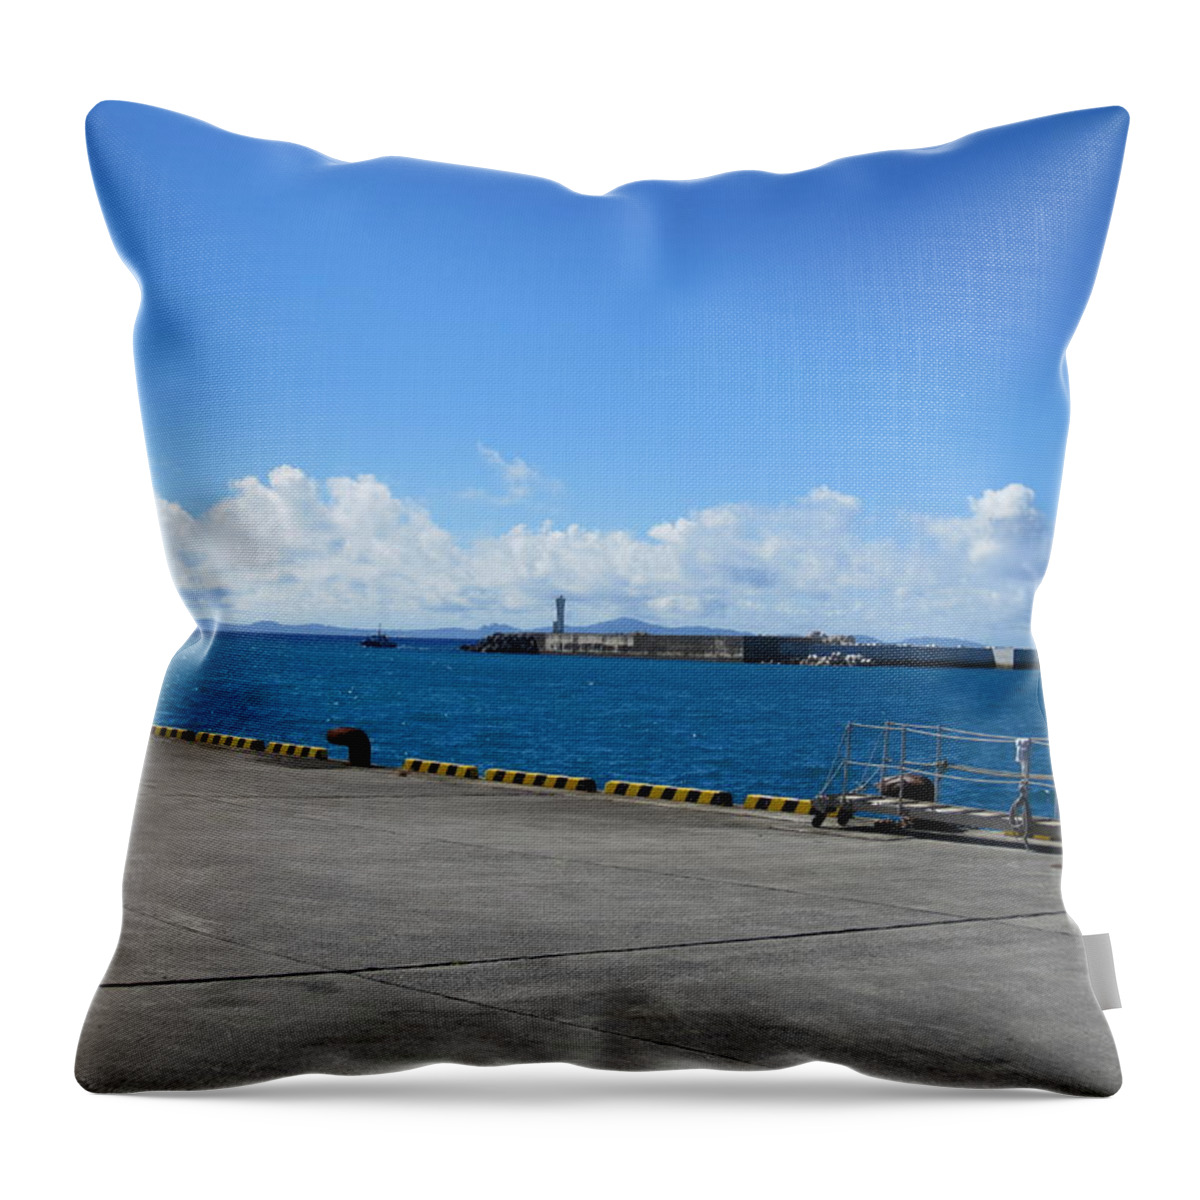  Throw Pillow featuring the photograph Sea Of Okinawa by Kenta Horikoshi